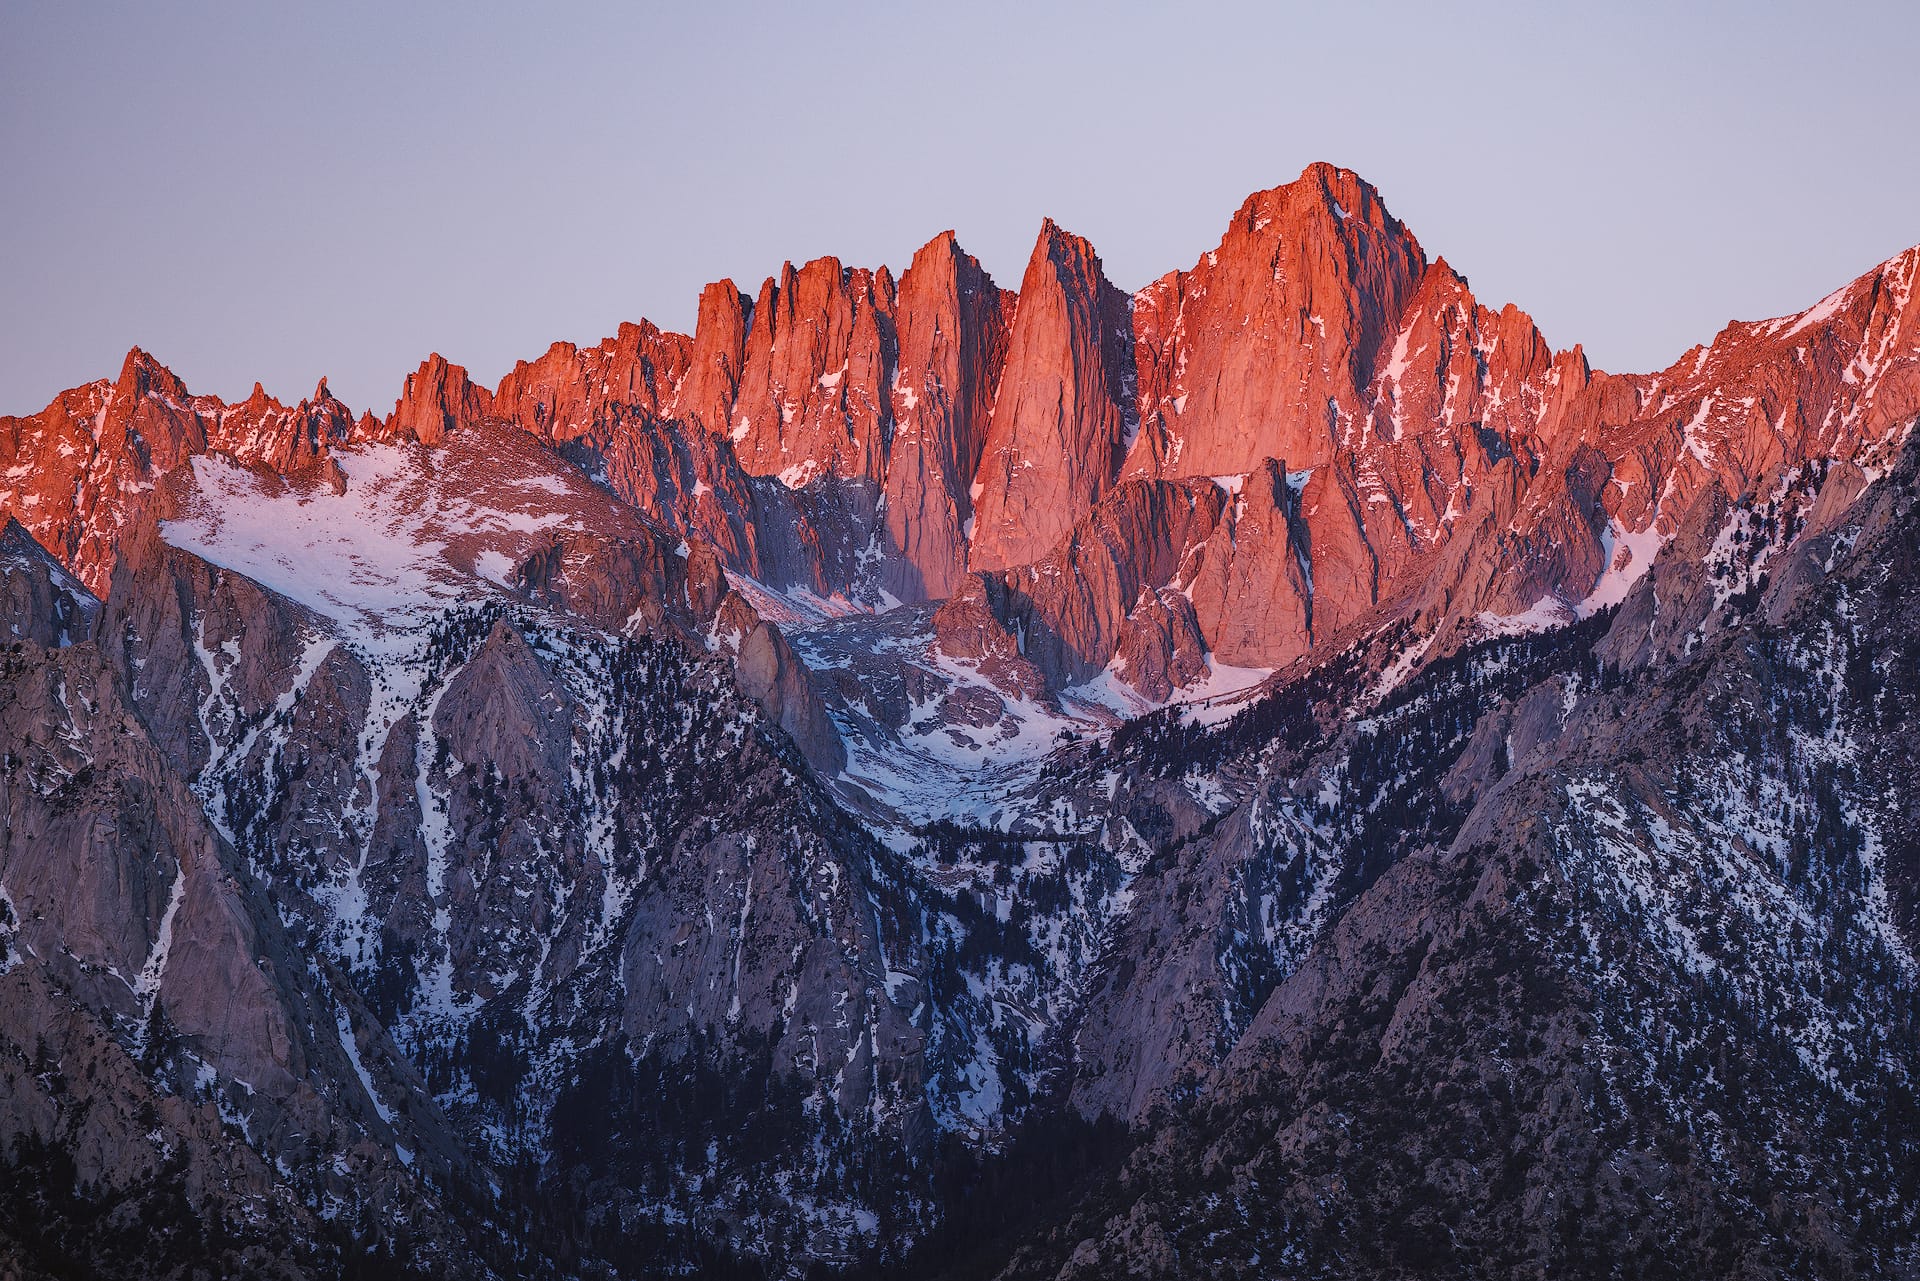 Eastern Sierra mountains at sunrise, 2022